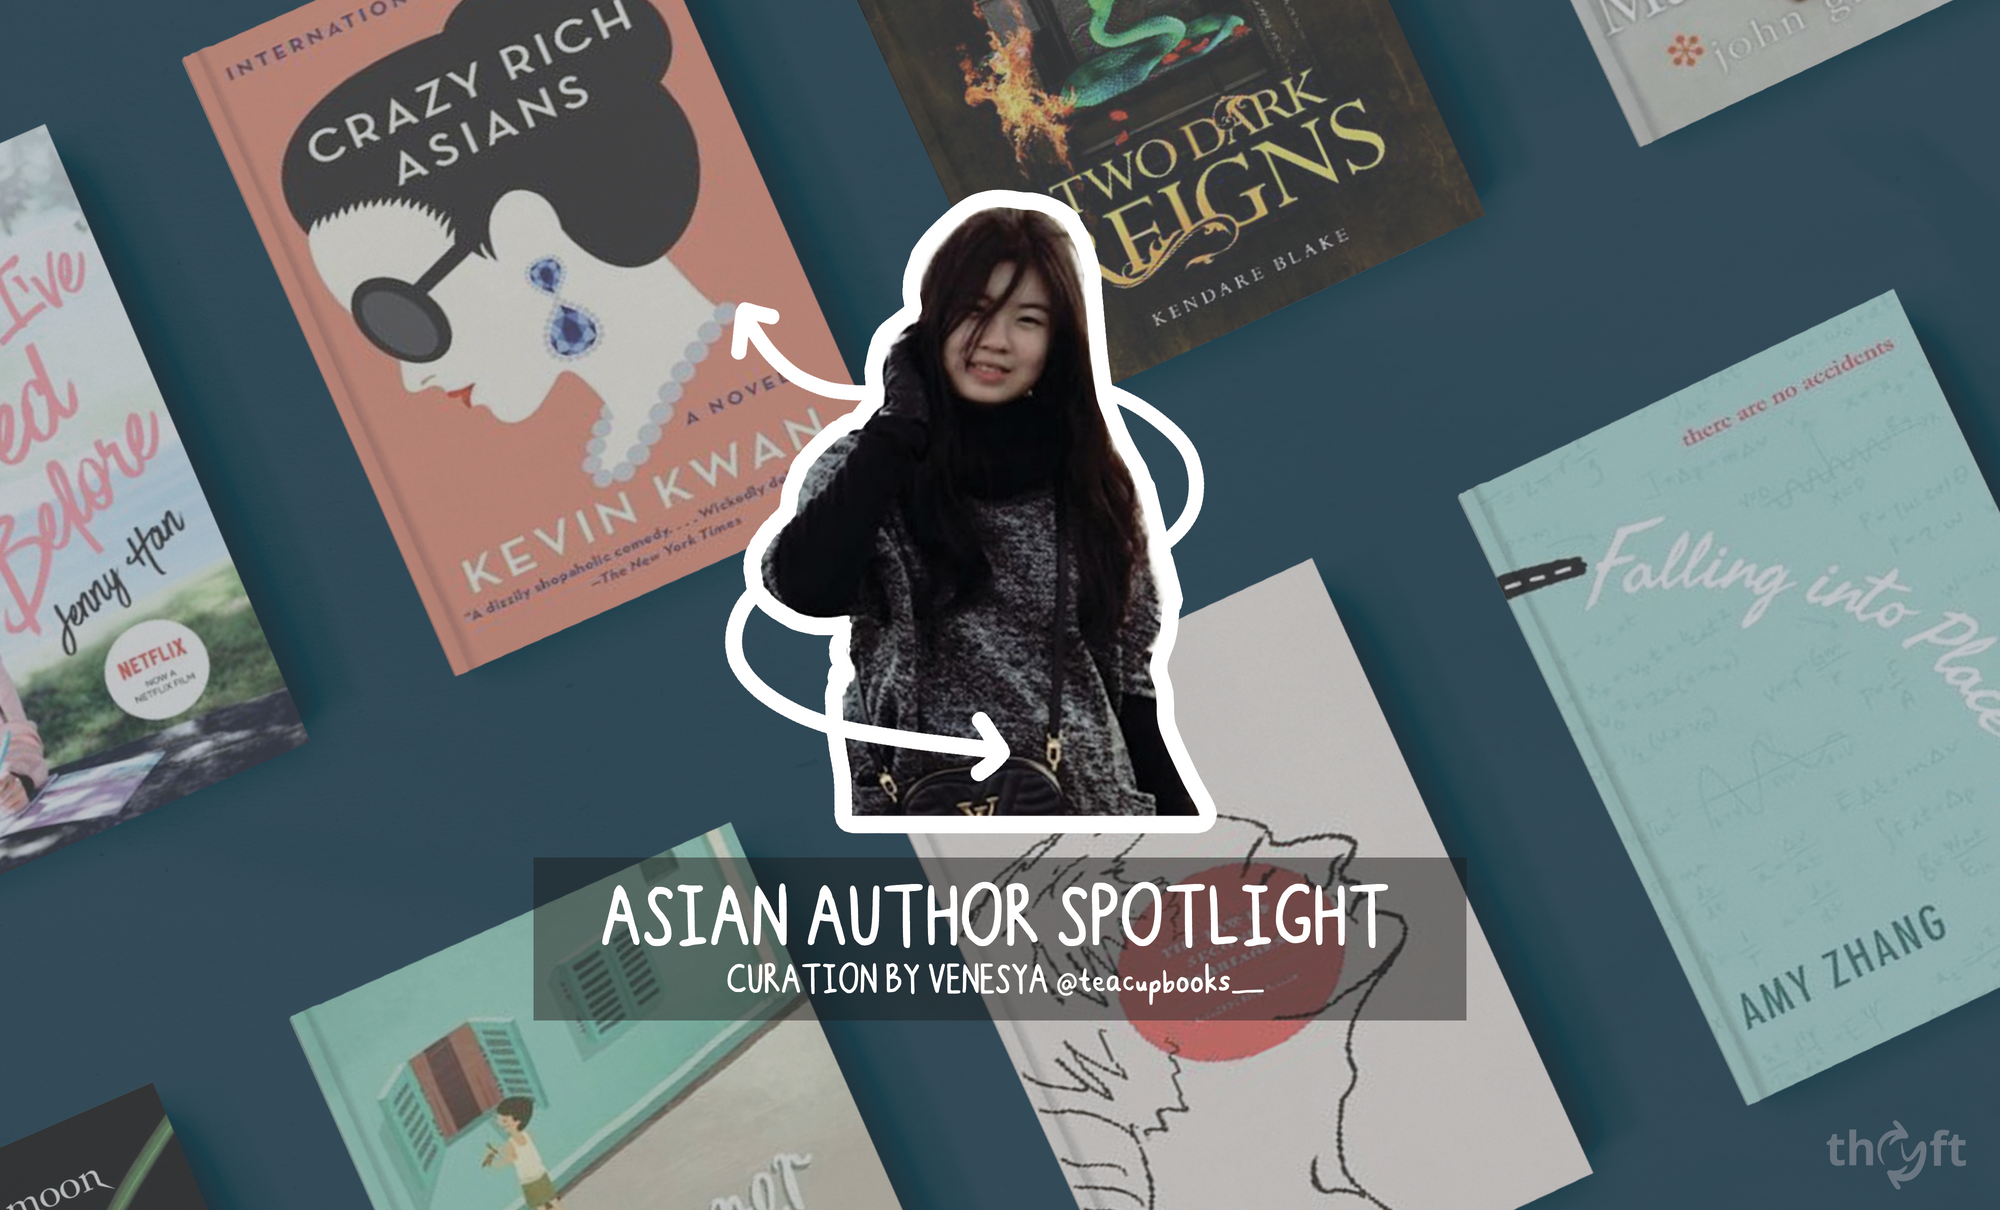 Asian Author Spotlight: Recommendations by Venesya